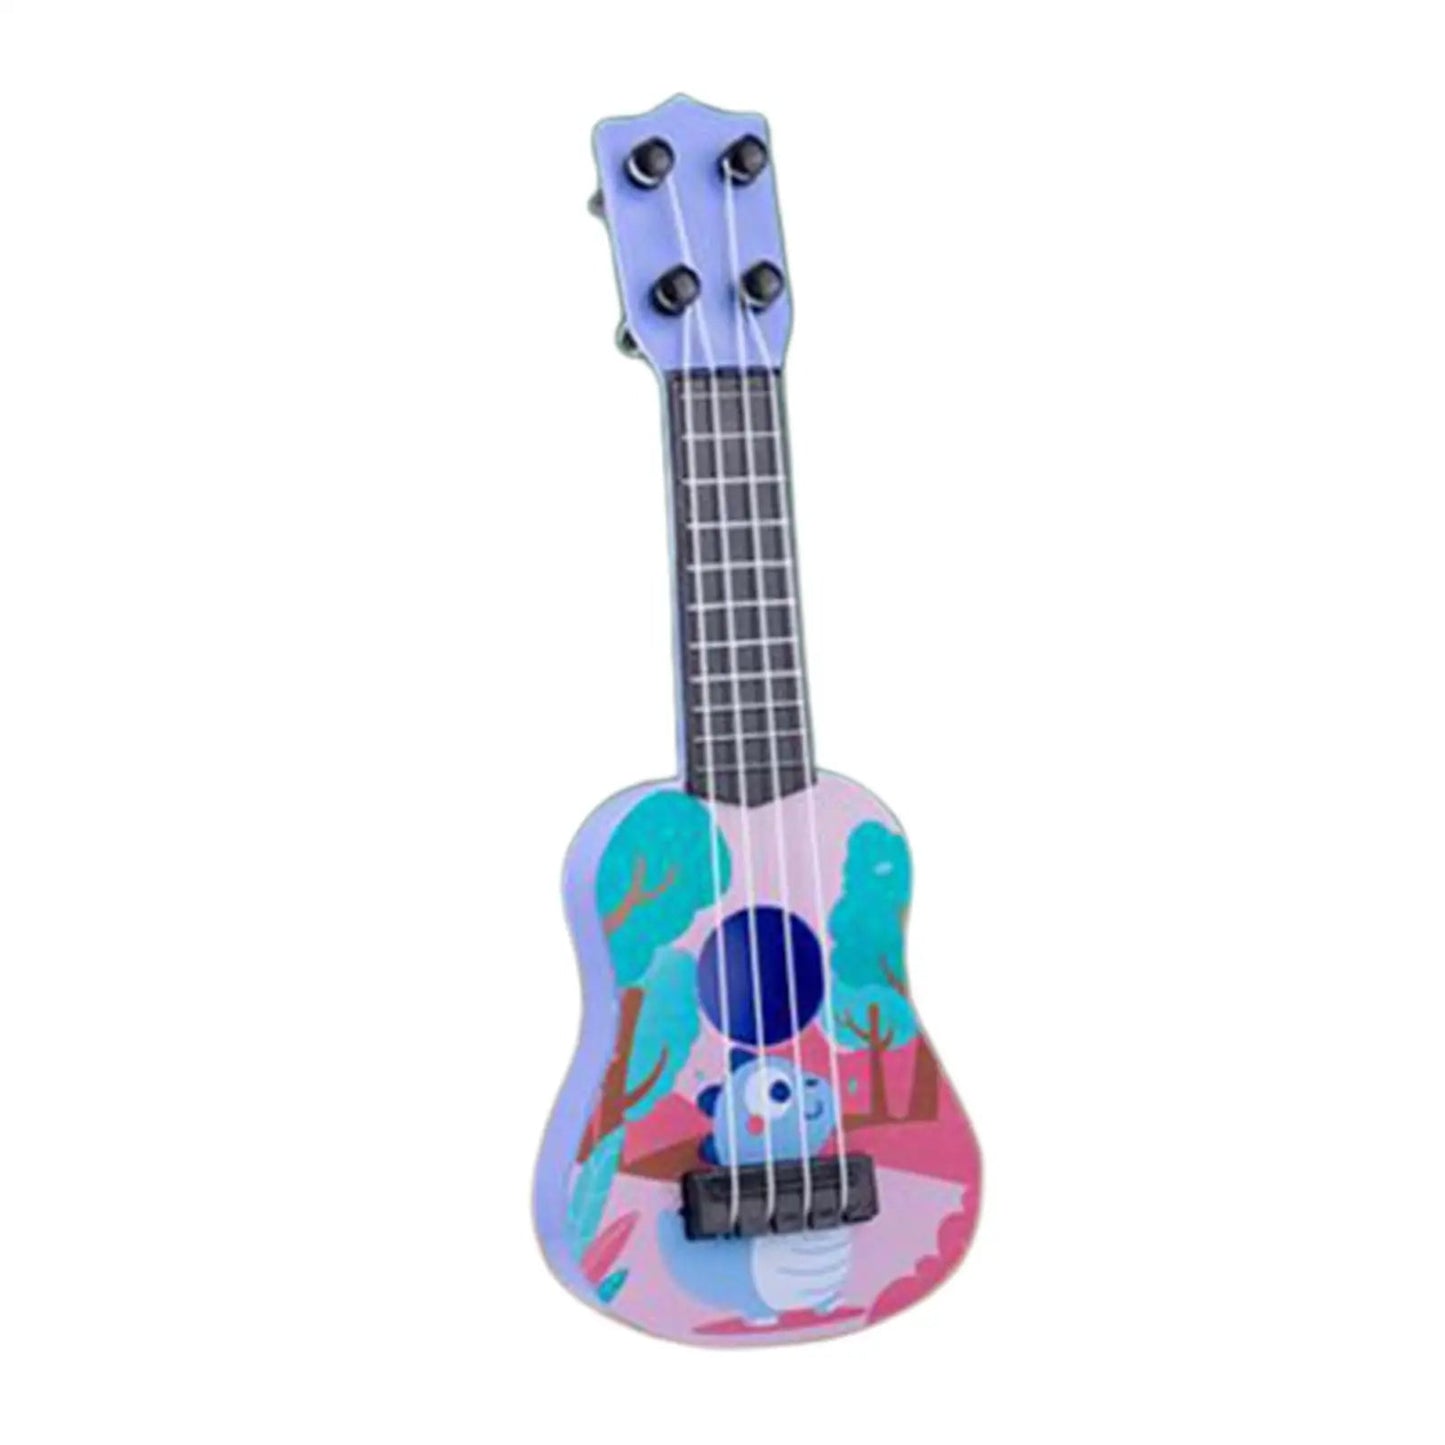 Mini Ukulele Guitar Toy for Early Education of Children